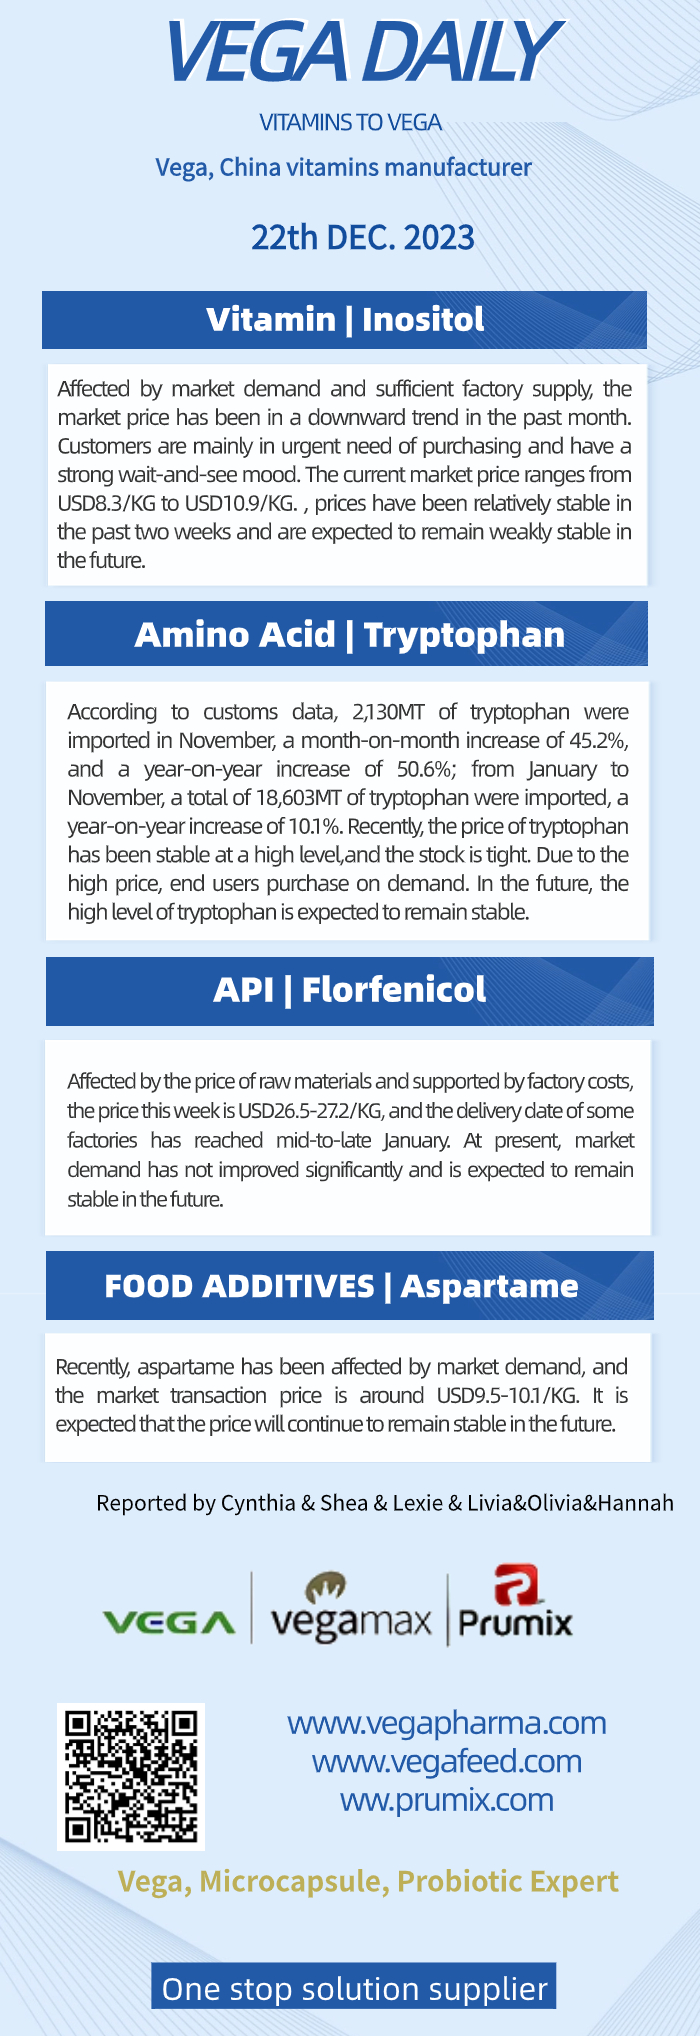 Vega Daily Dated on Dec 22nd 2023 Inositol Tryptophan Florfenicol Aspartame.jpg